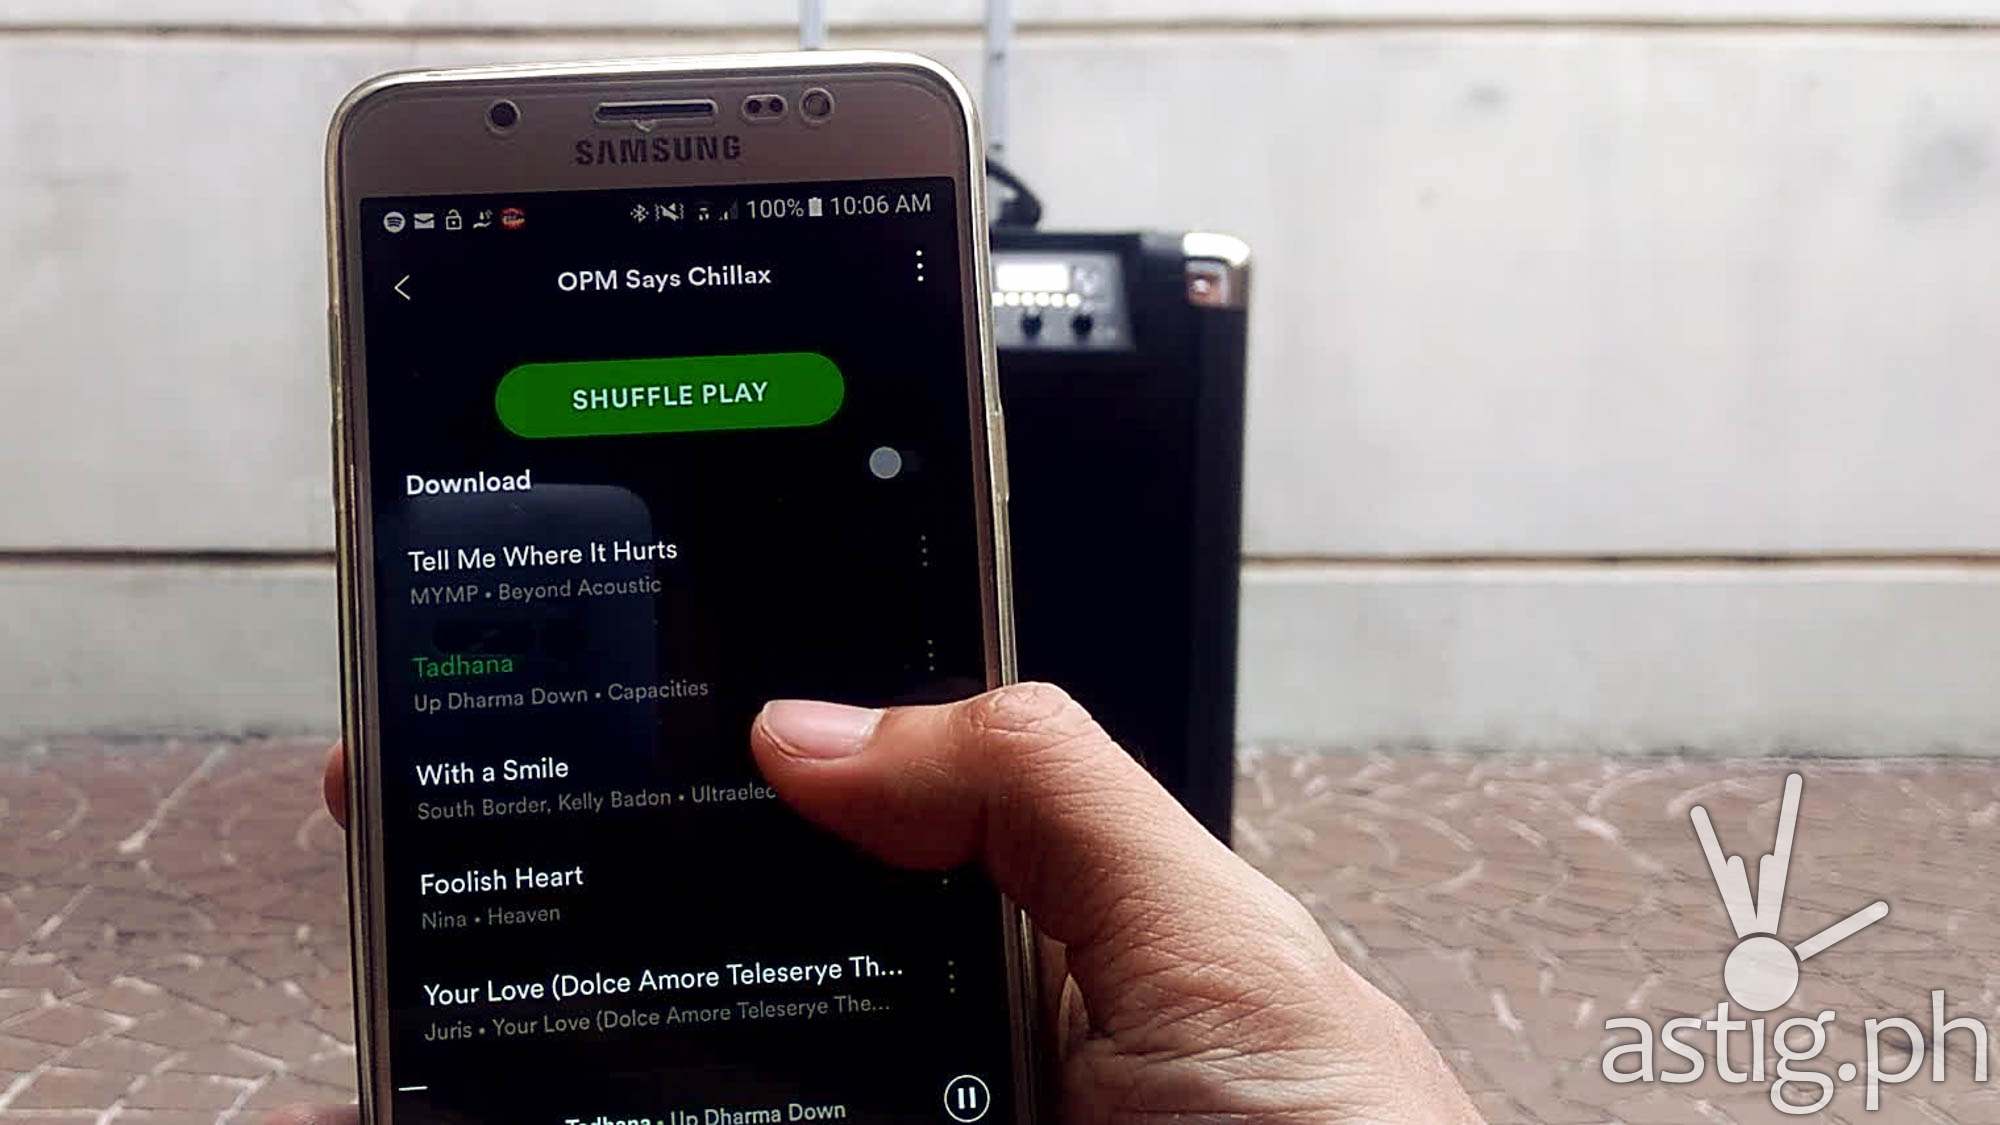 Streaming Spotify to the LD Roadjack 10 via Bluetooth